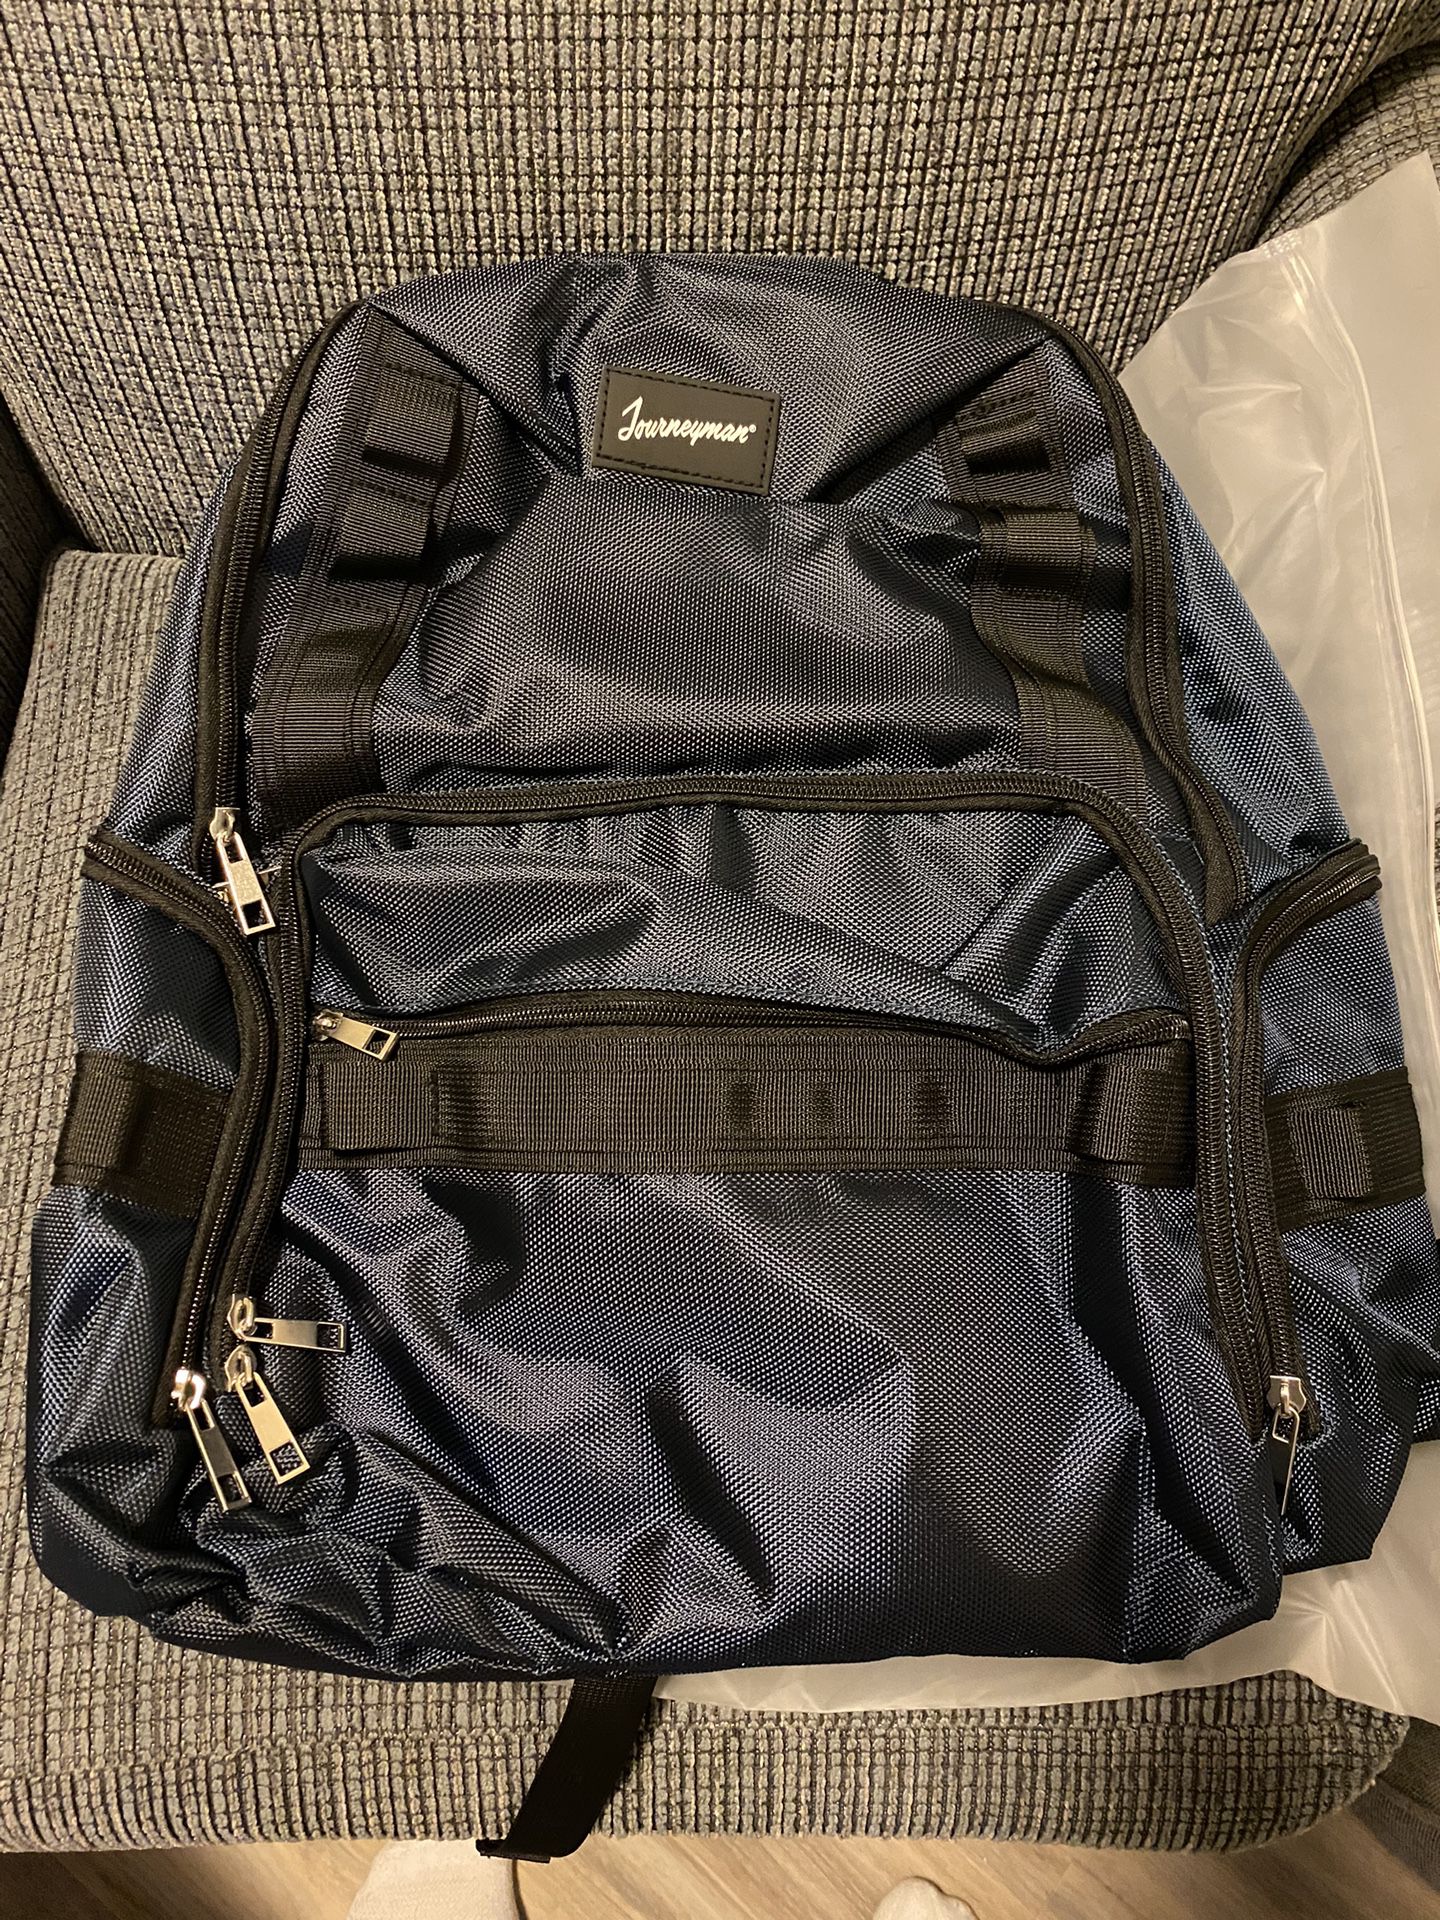 Journeyman Backpack 